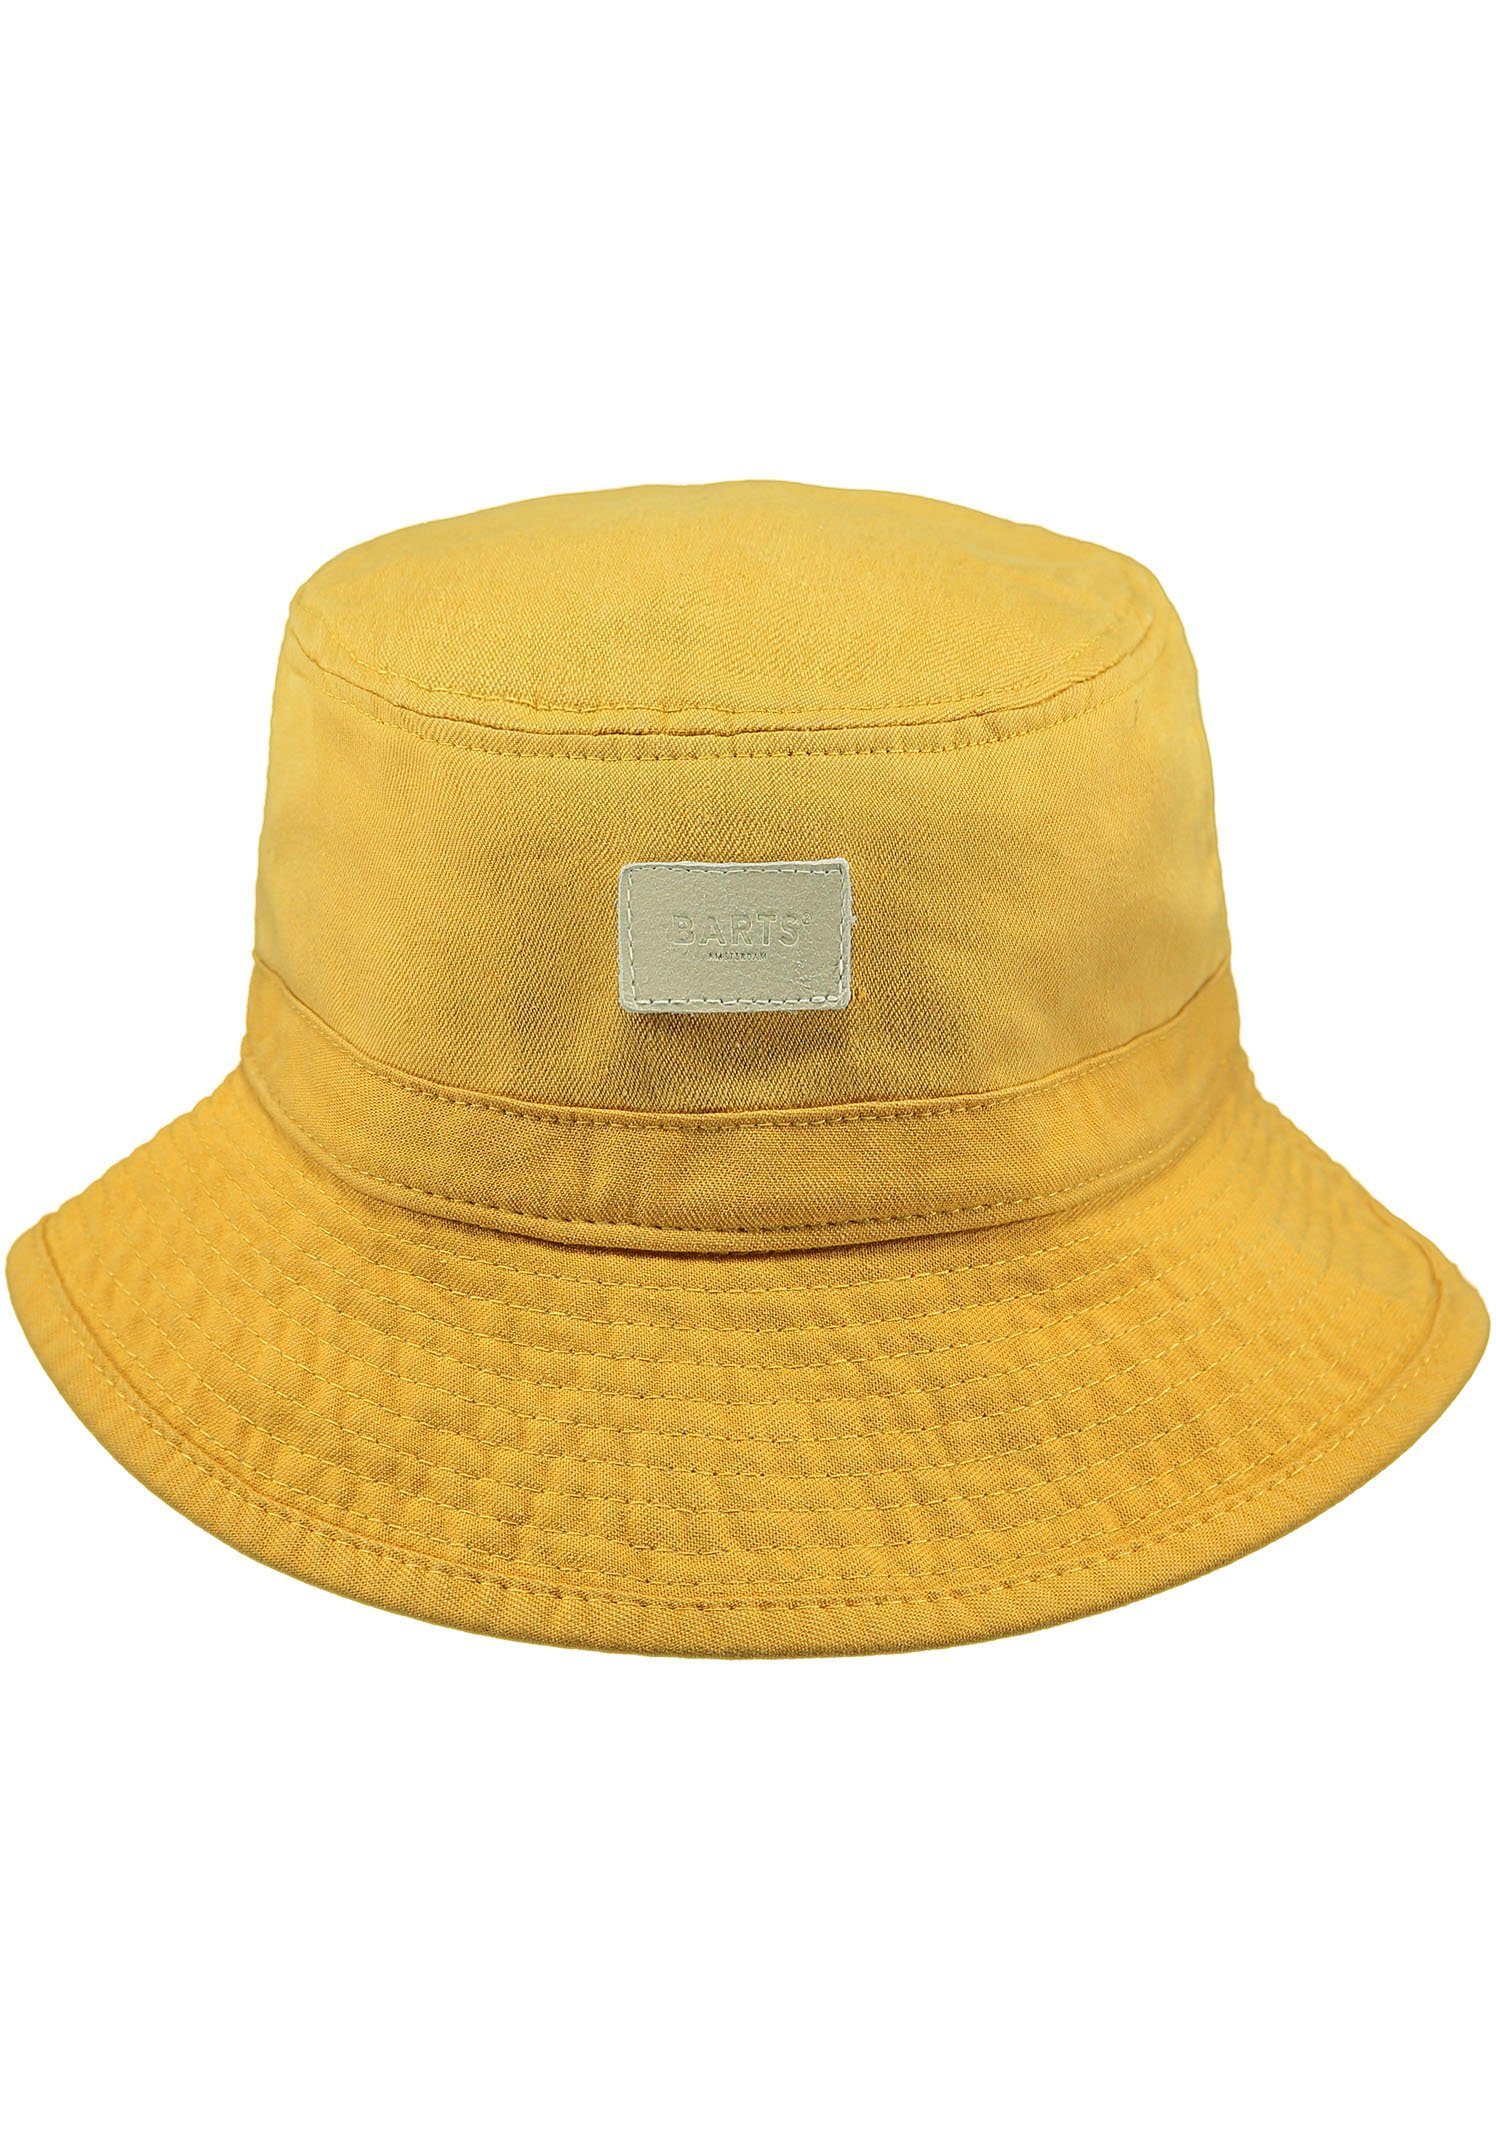 yellow Orohena Barts Fischerhut Hat